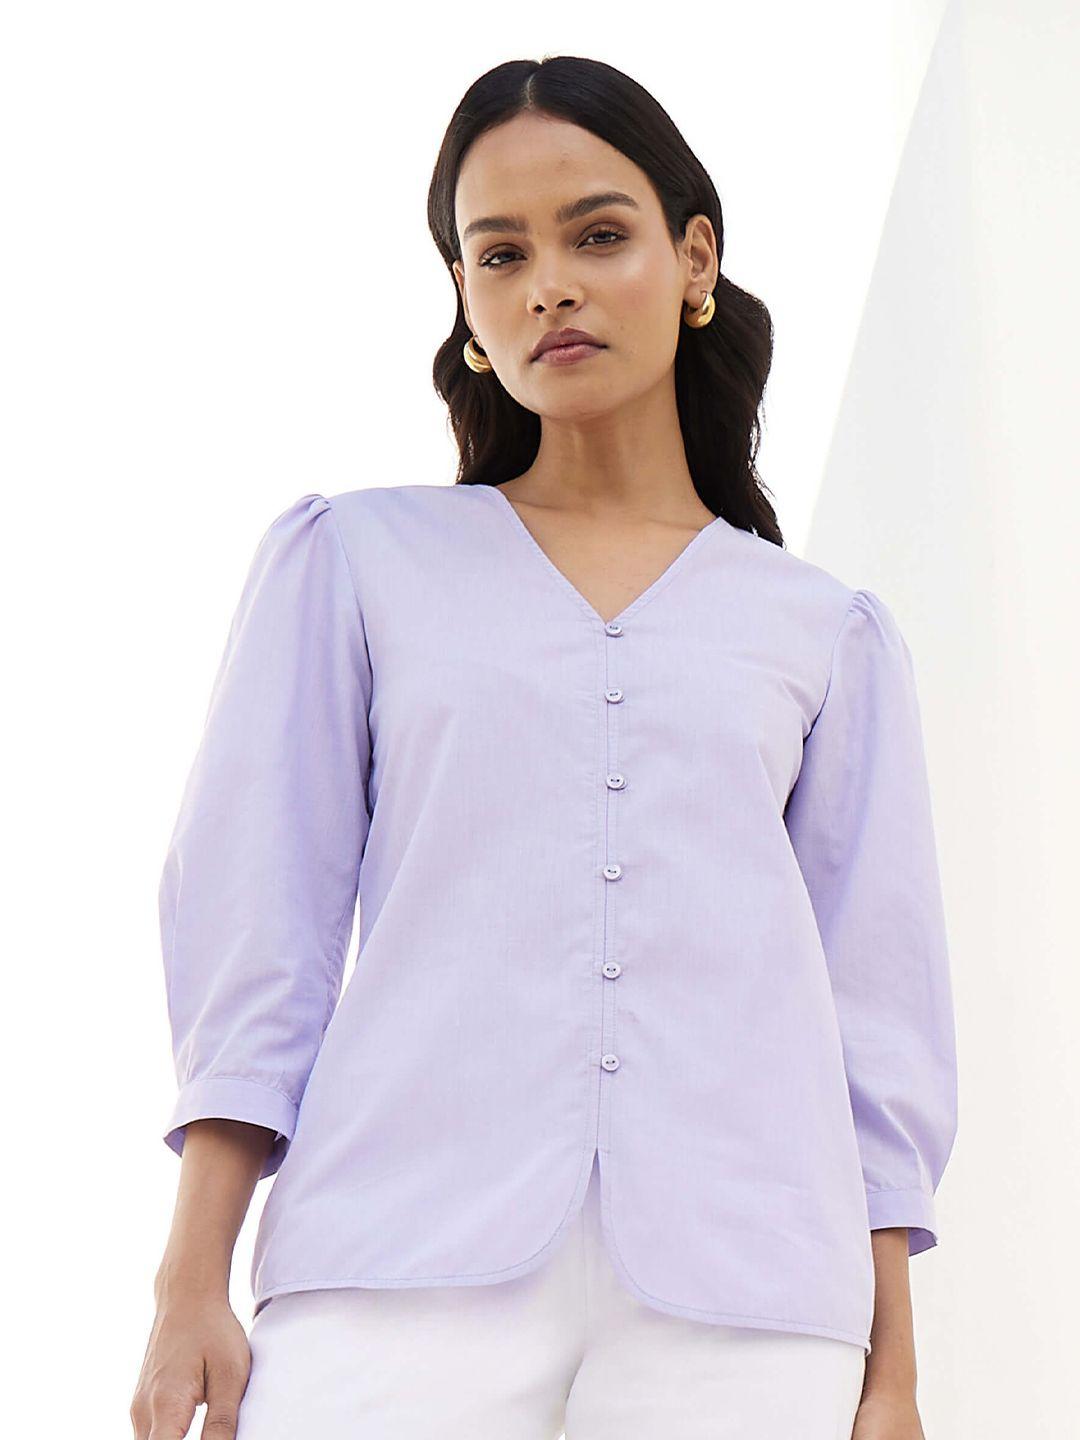 salt attire v-neck puff sleeves cotton shirt style top